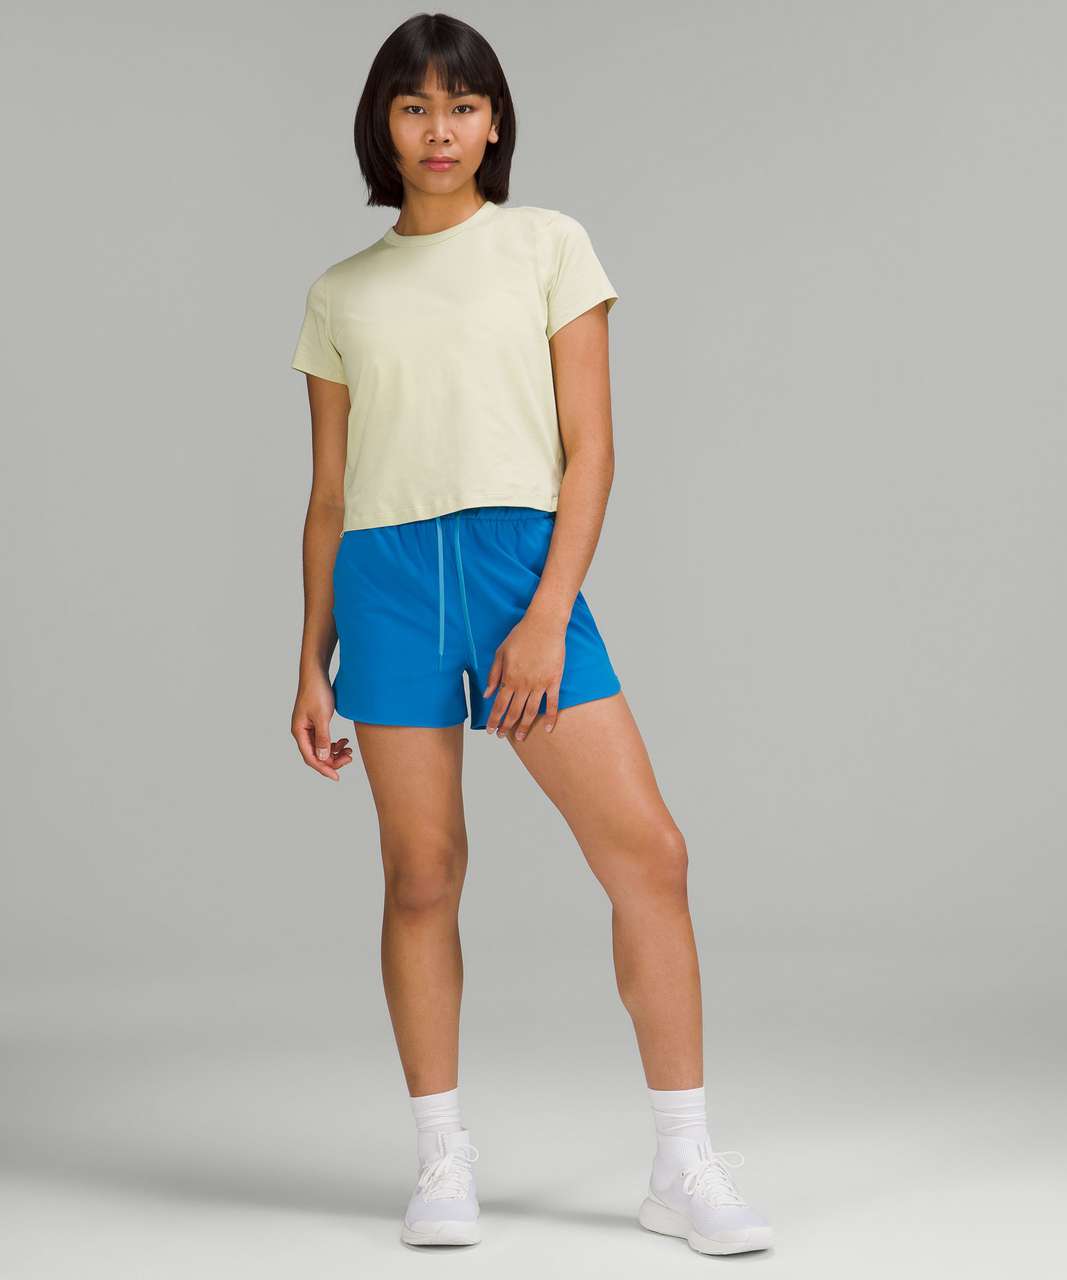 Lululemon Stretch High-Rise Short 3.5 size2, Women's Fashion, Bottoms,  Shorts on Carousell